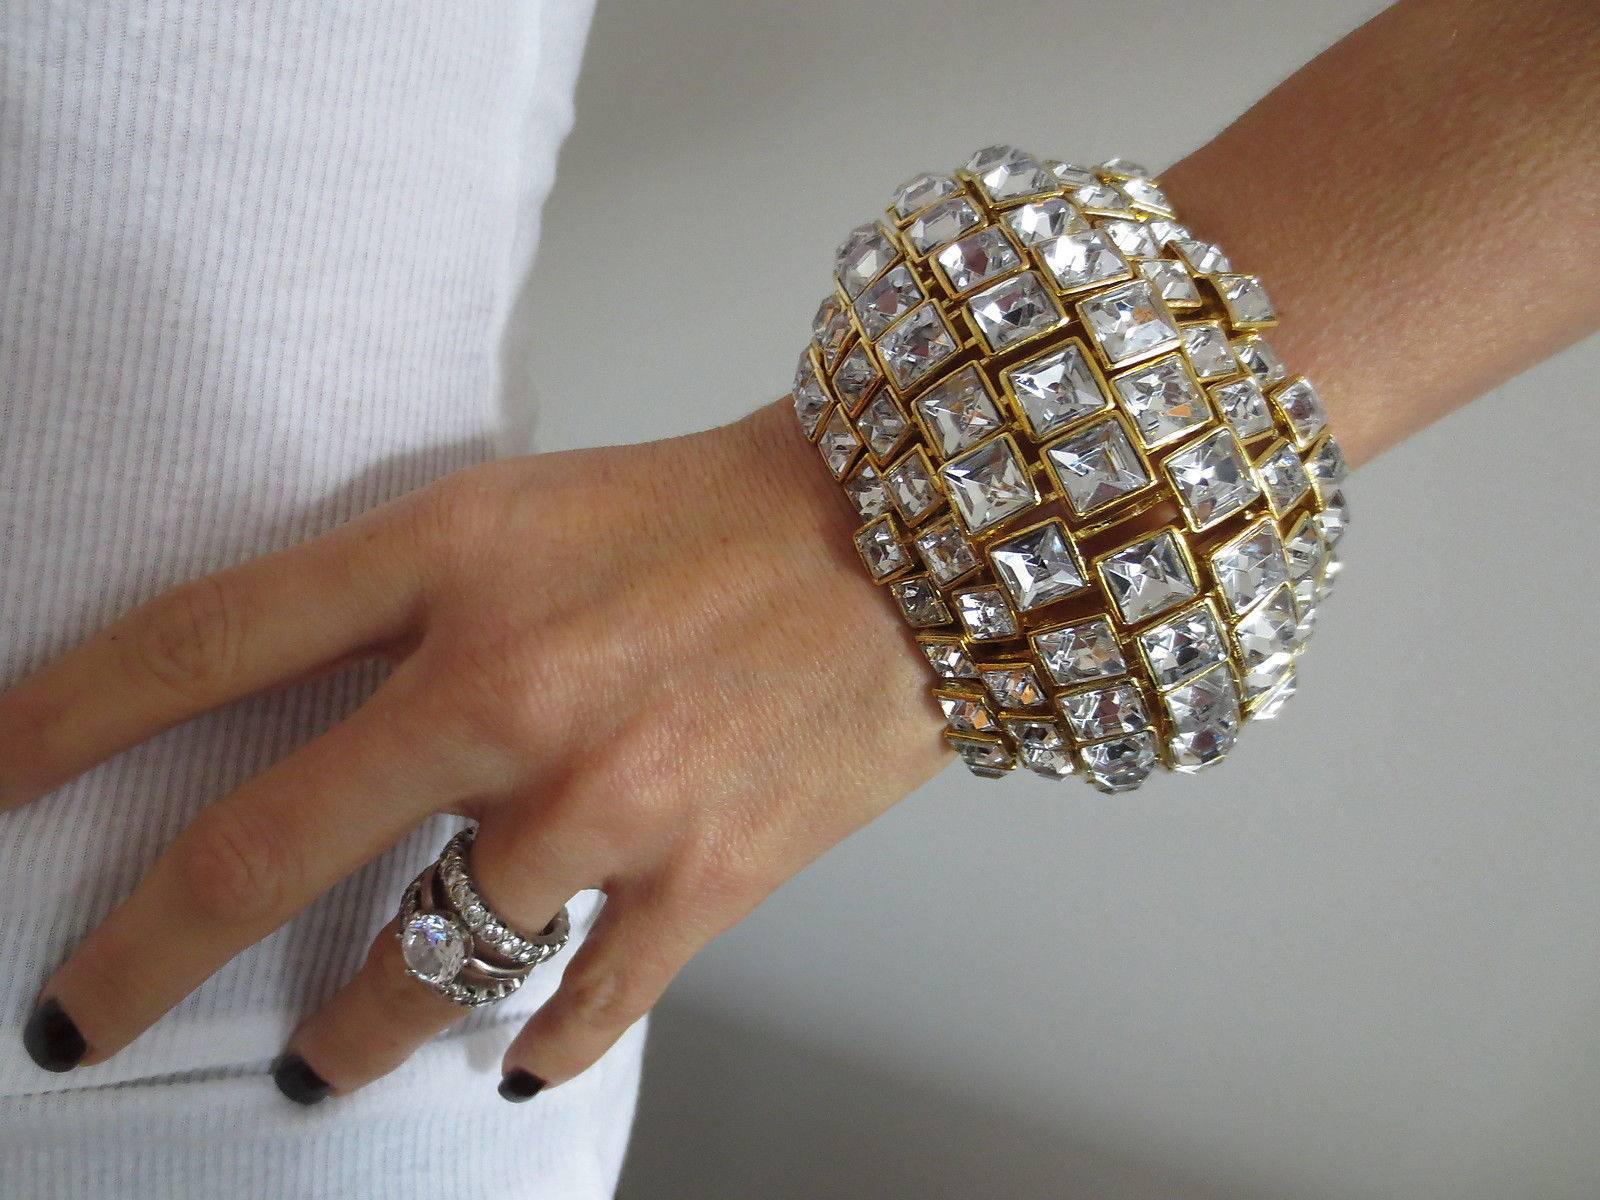 Fabulous Museum Quality domed bracelet set with sparkling CZ stones; gold tone setting. Bracelet measures approx. 2.75